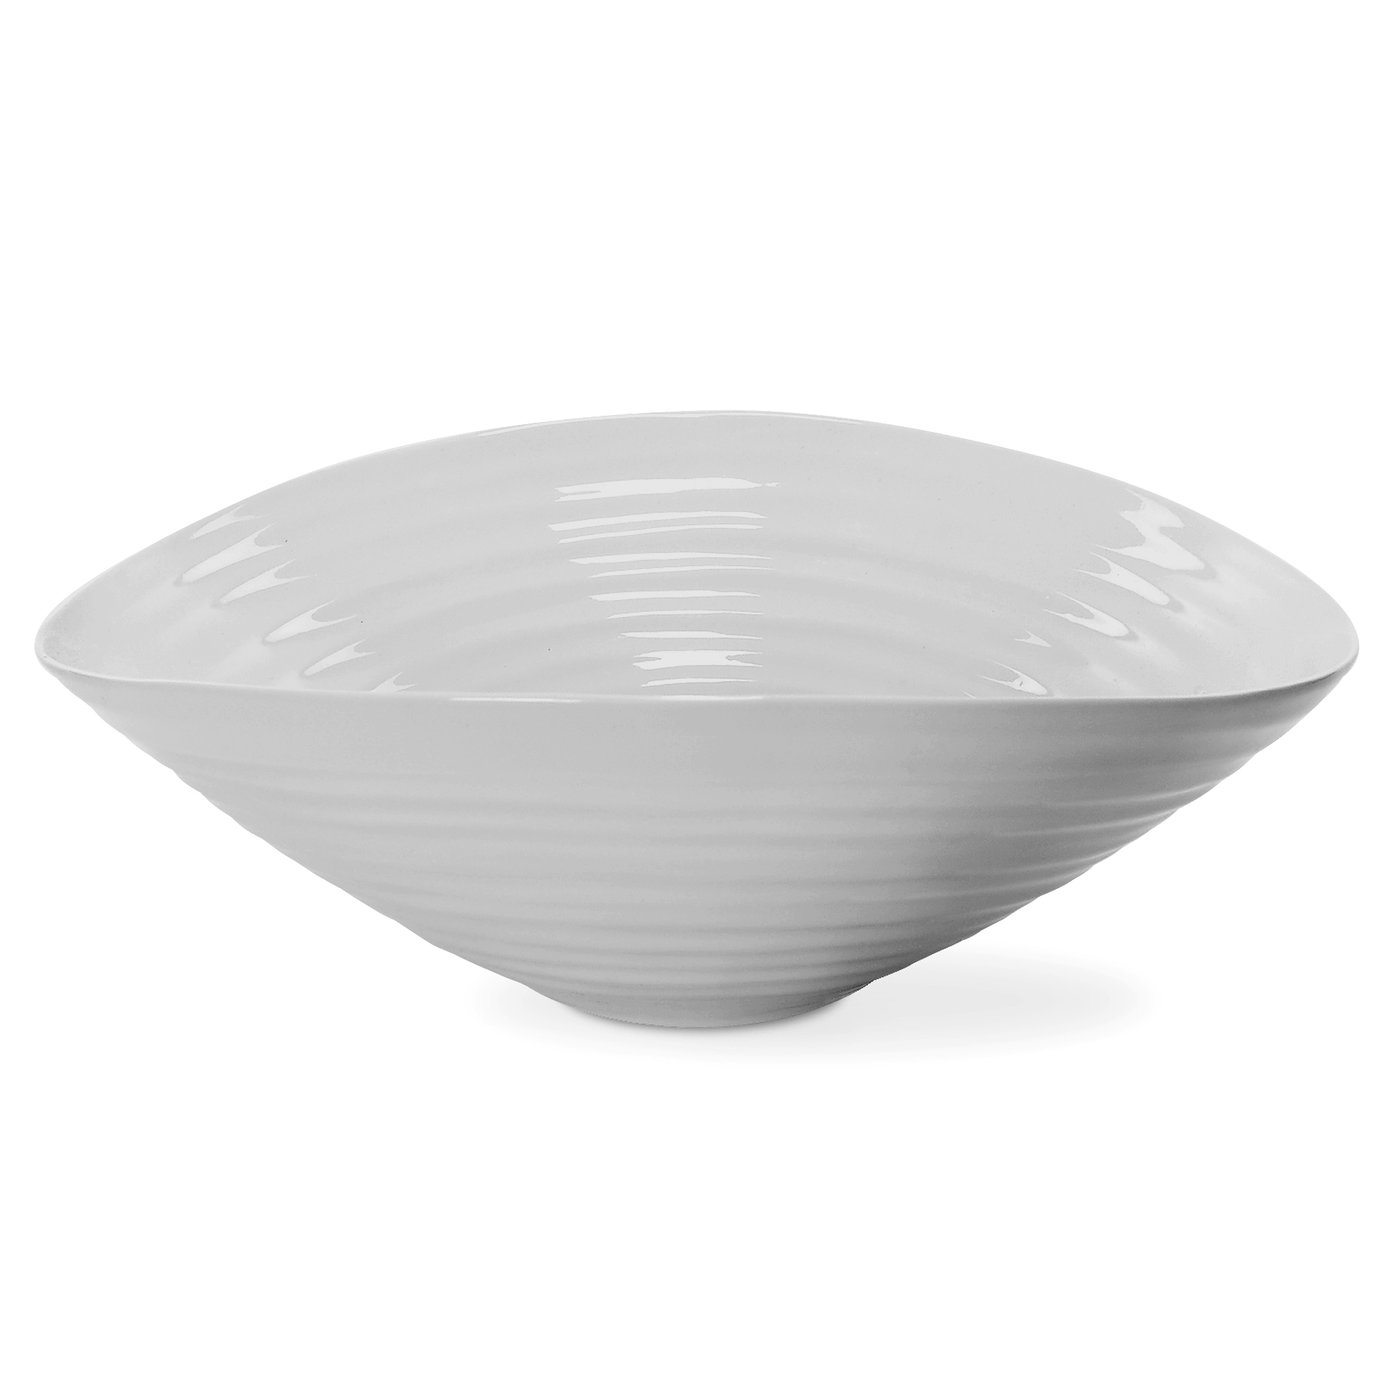 Sophie Conran Grey Large Salad Bowl image number null